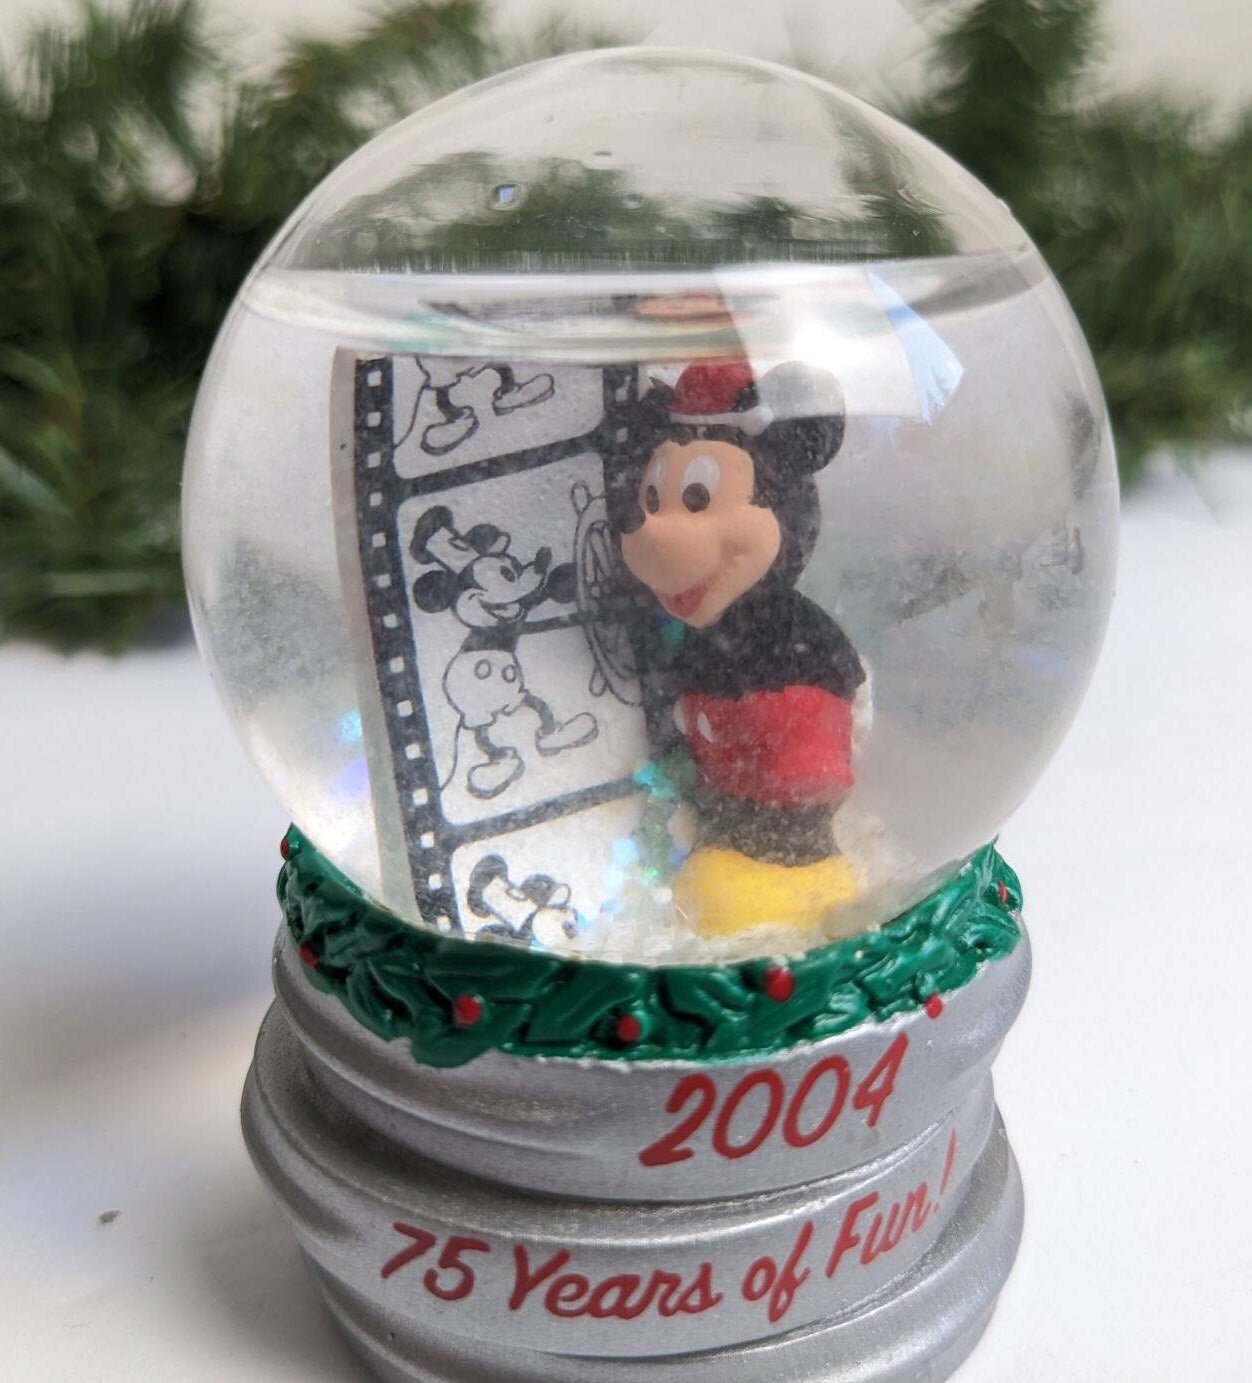 Mickey Mouse 2004 Mini Snow Globe